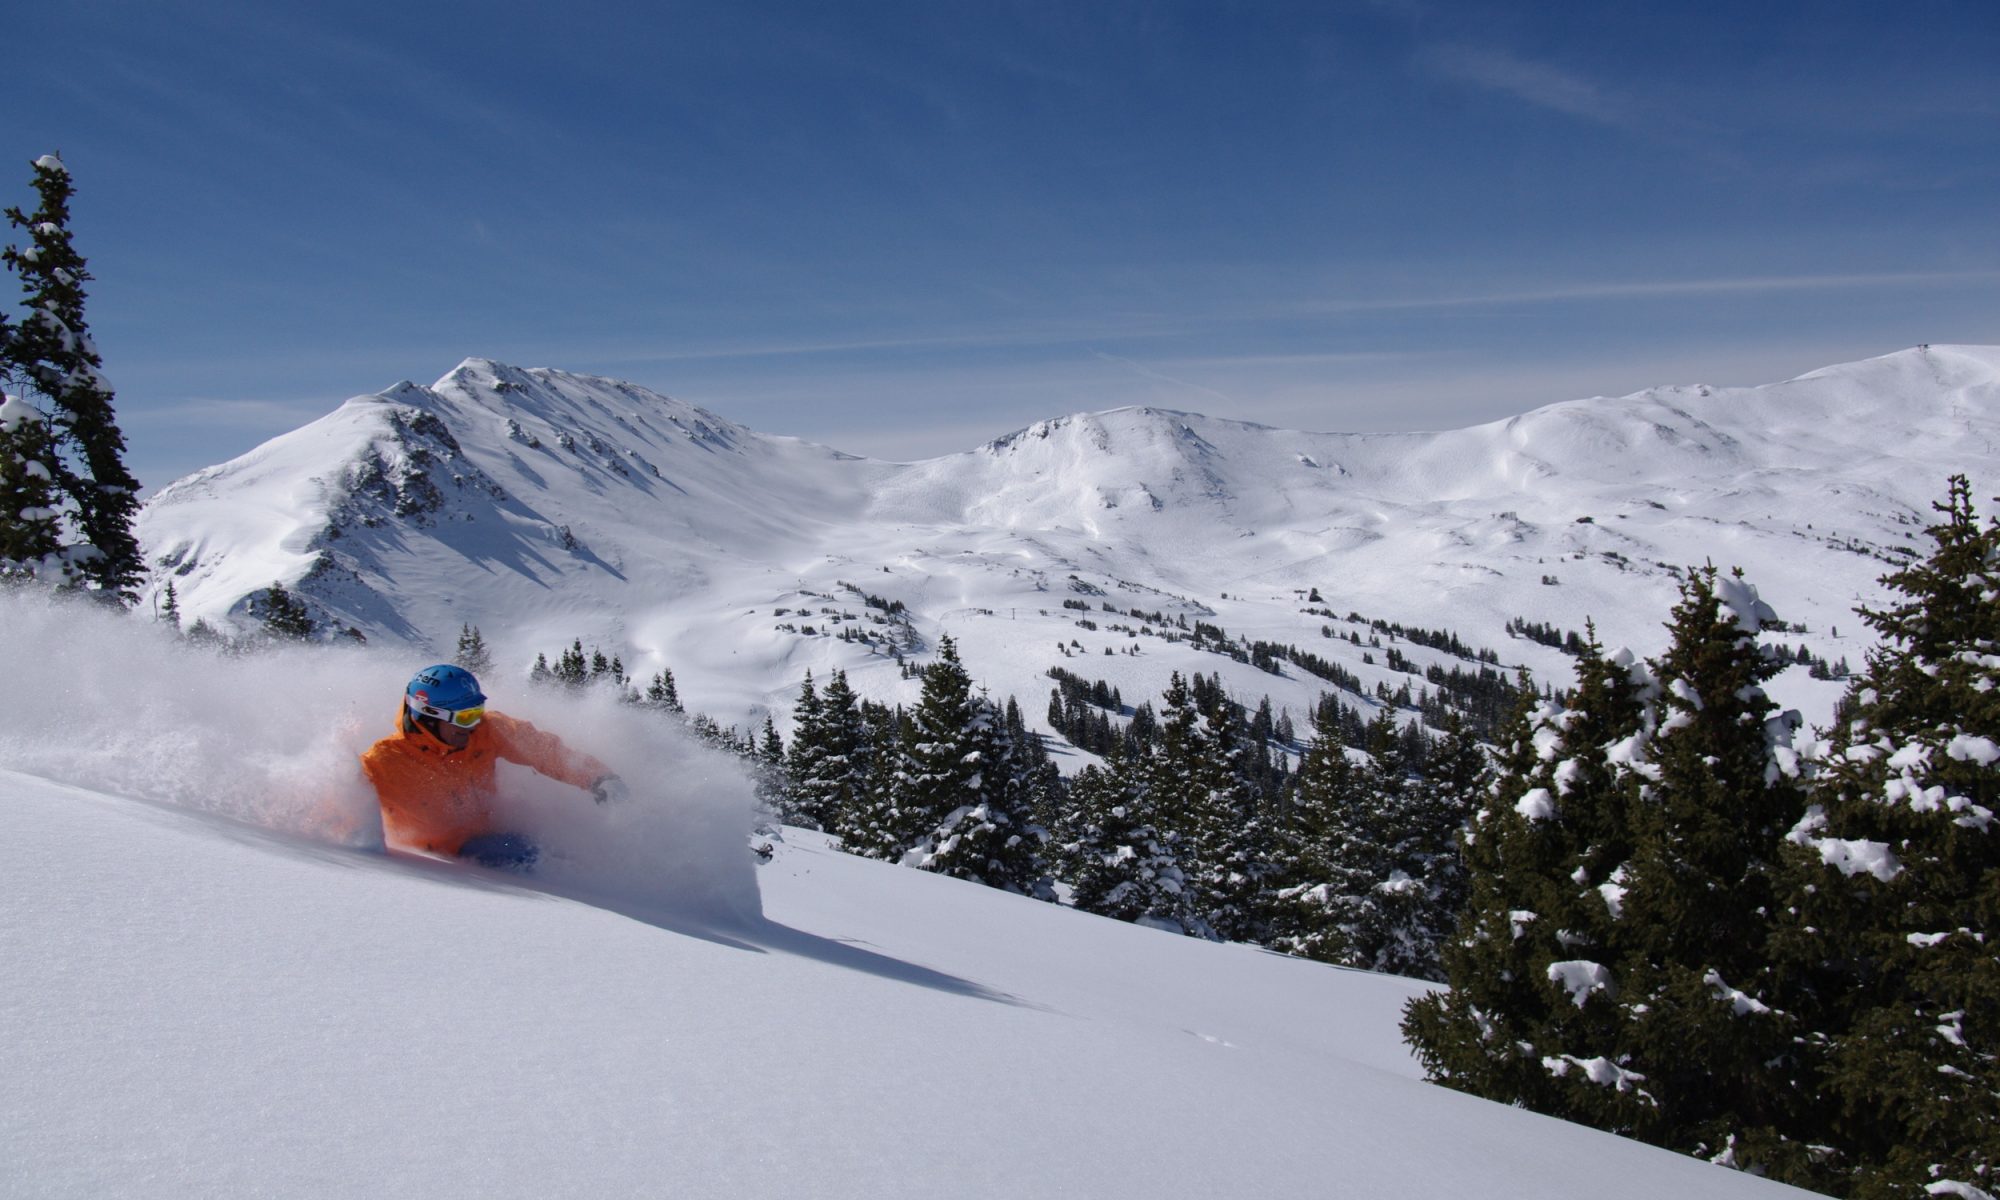 Loveland Ski Area - Powder Alliance. Several new resorts join the Powder Alliance for 2018-19 ski season